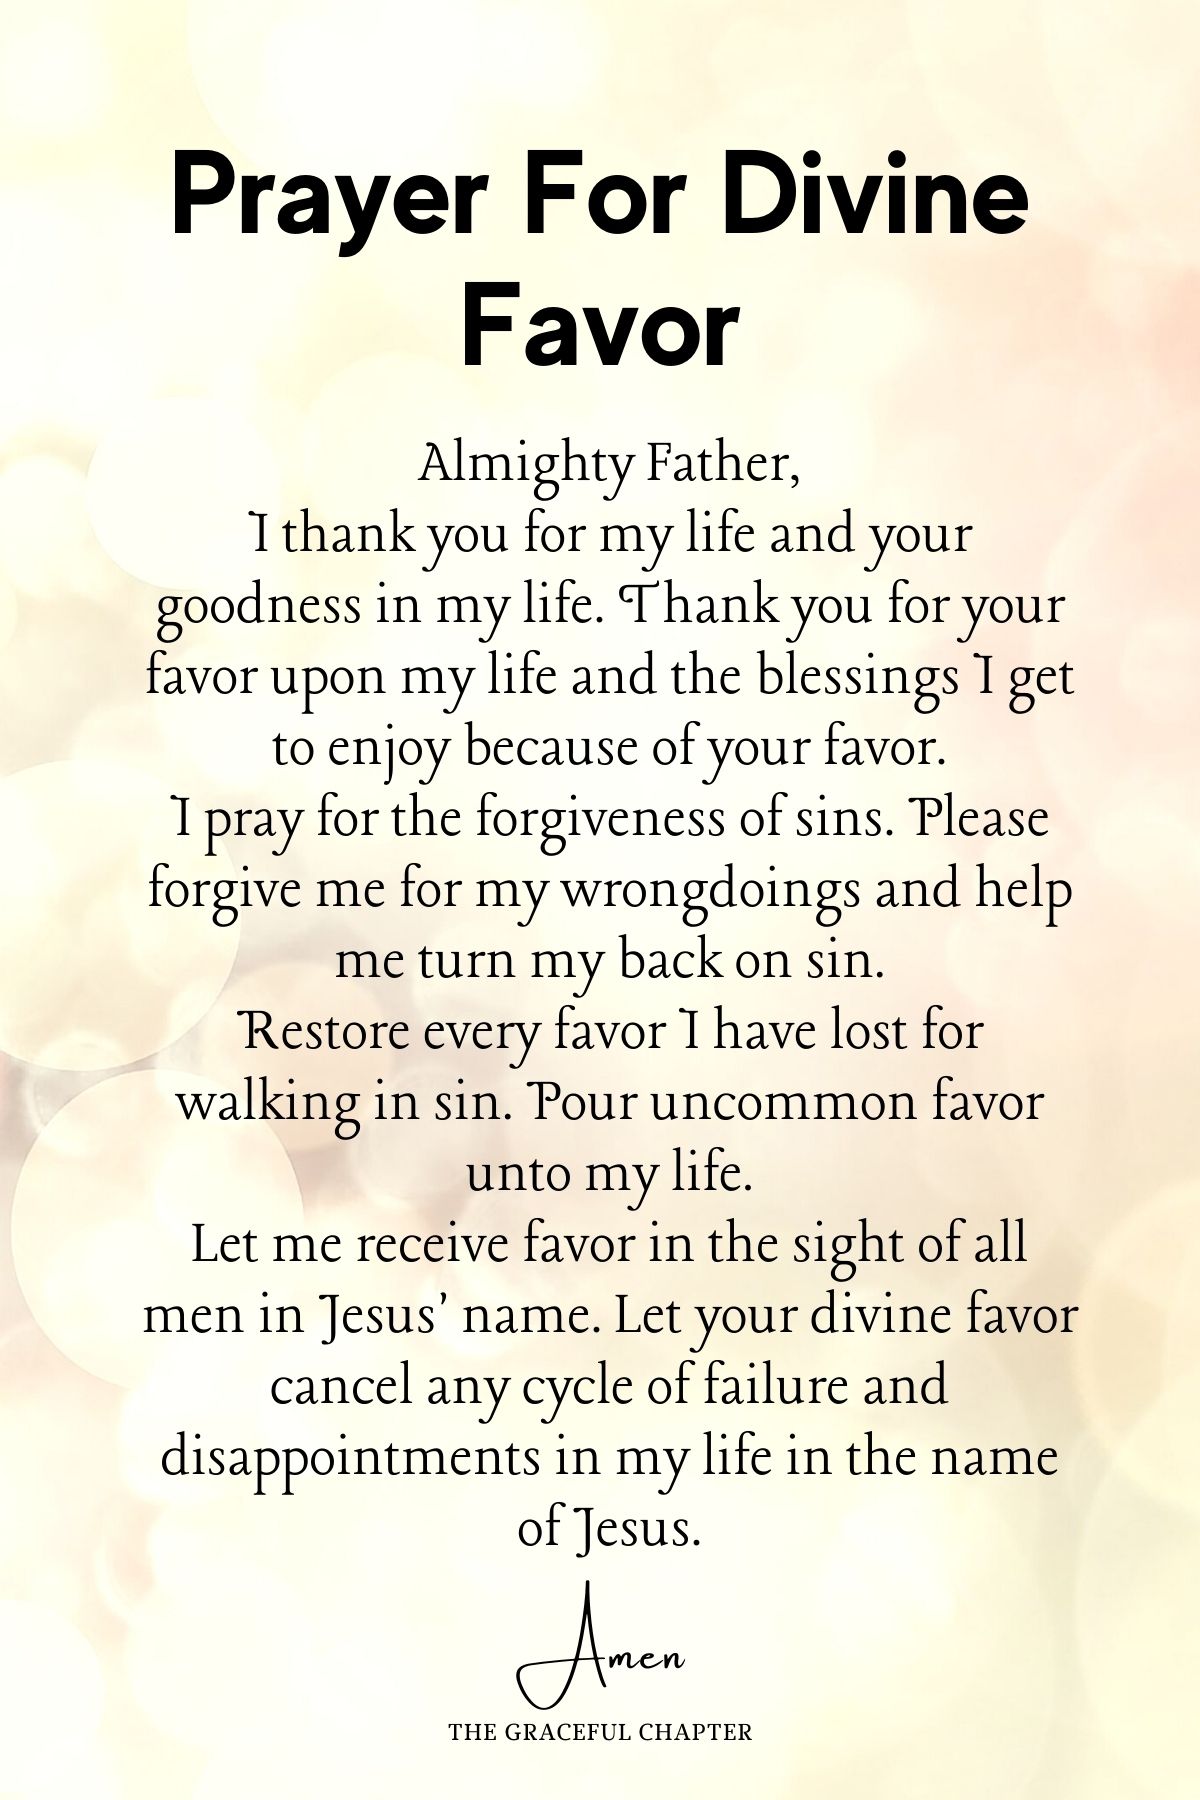 Prayer for divine favor